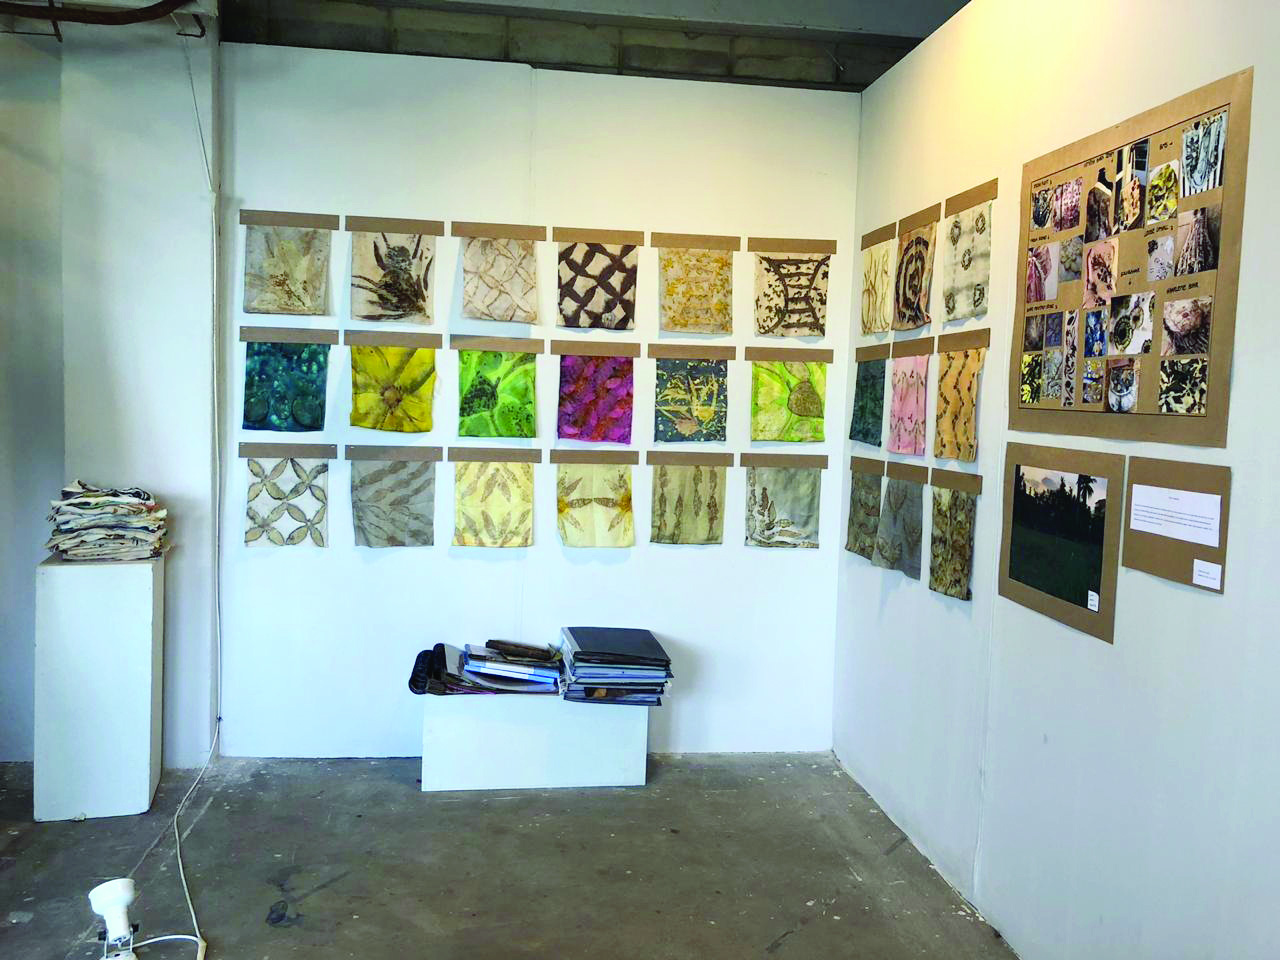 ivs graduates to showcase designs at global textile fair